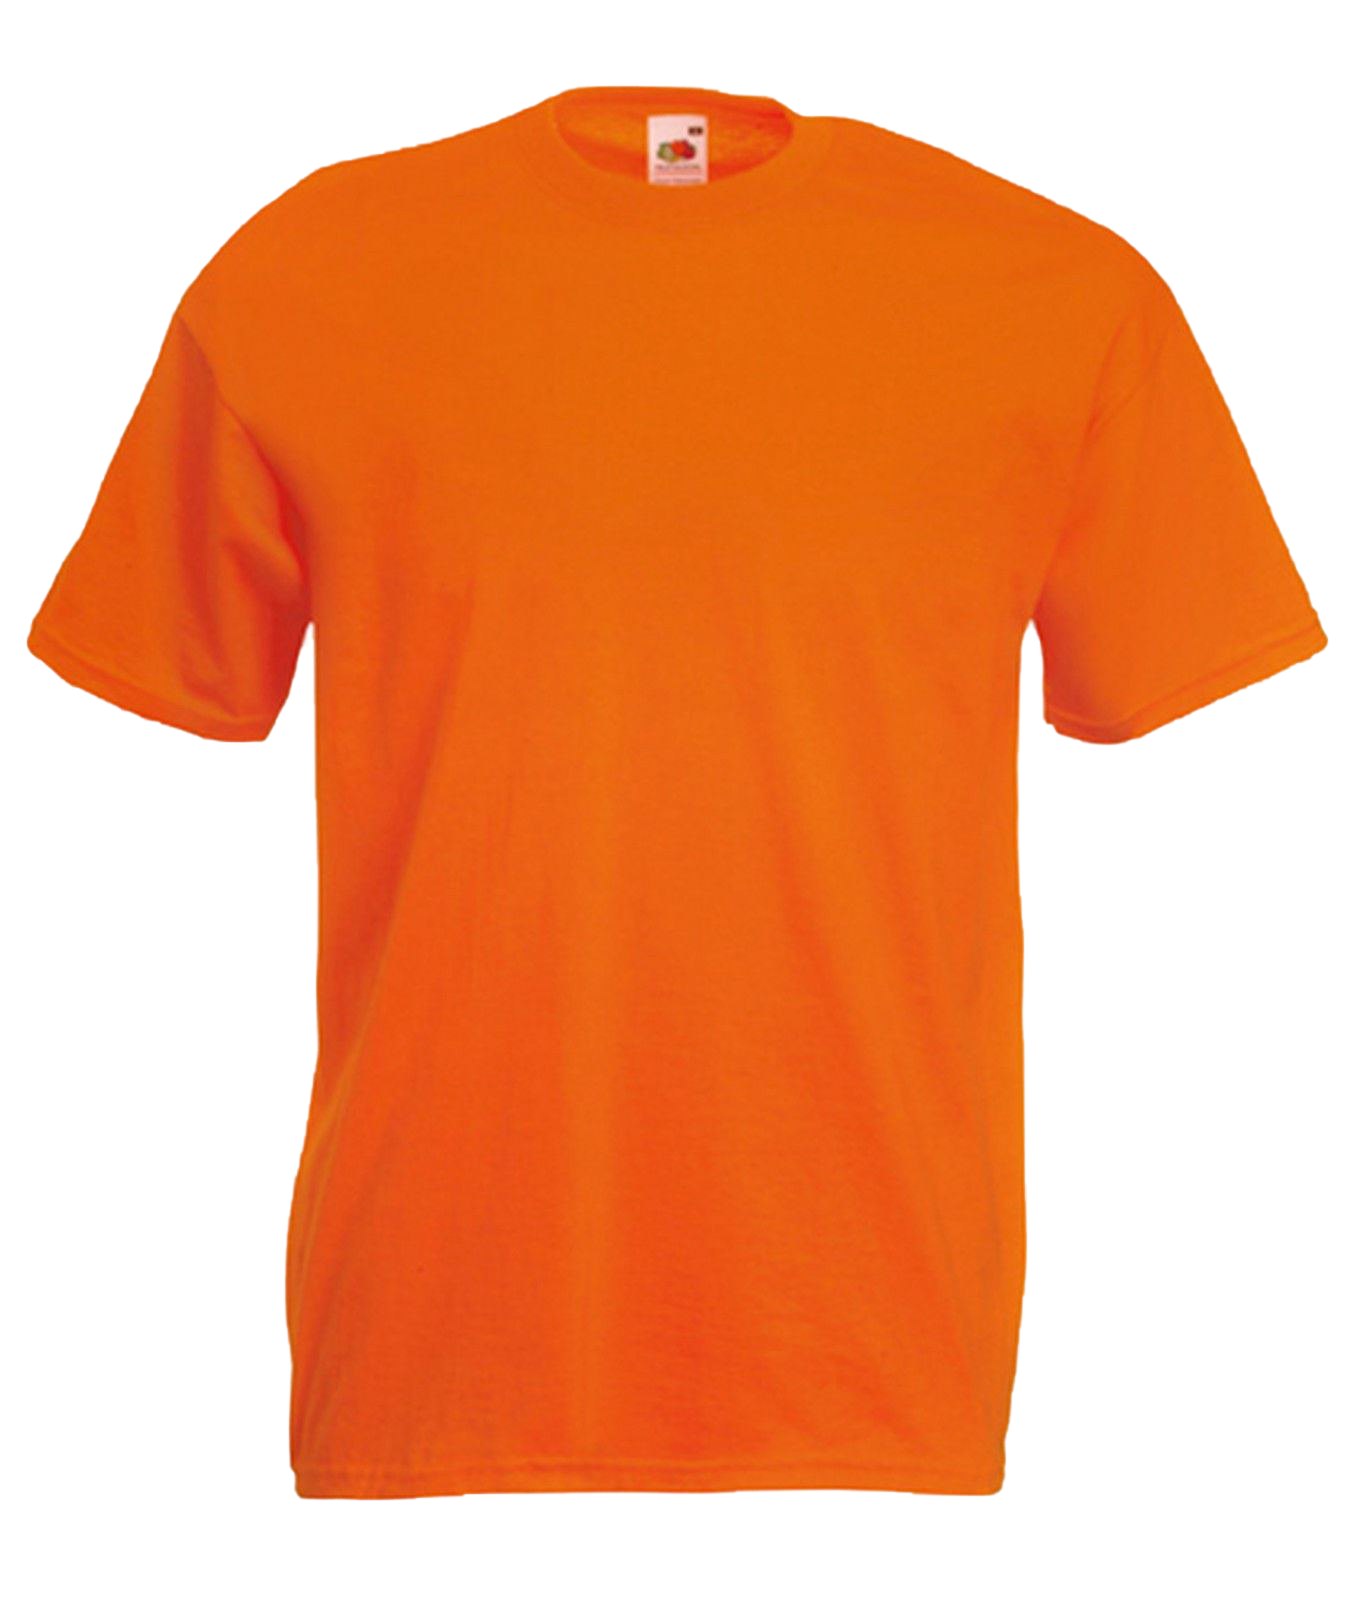 Fondo de imagen de PNG de camiseta naranja lisa